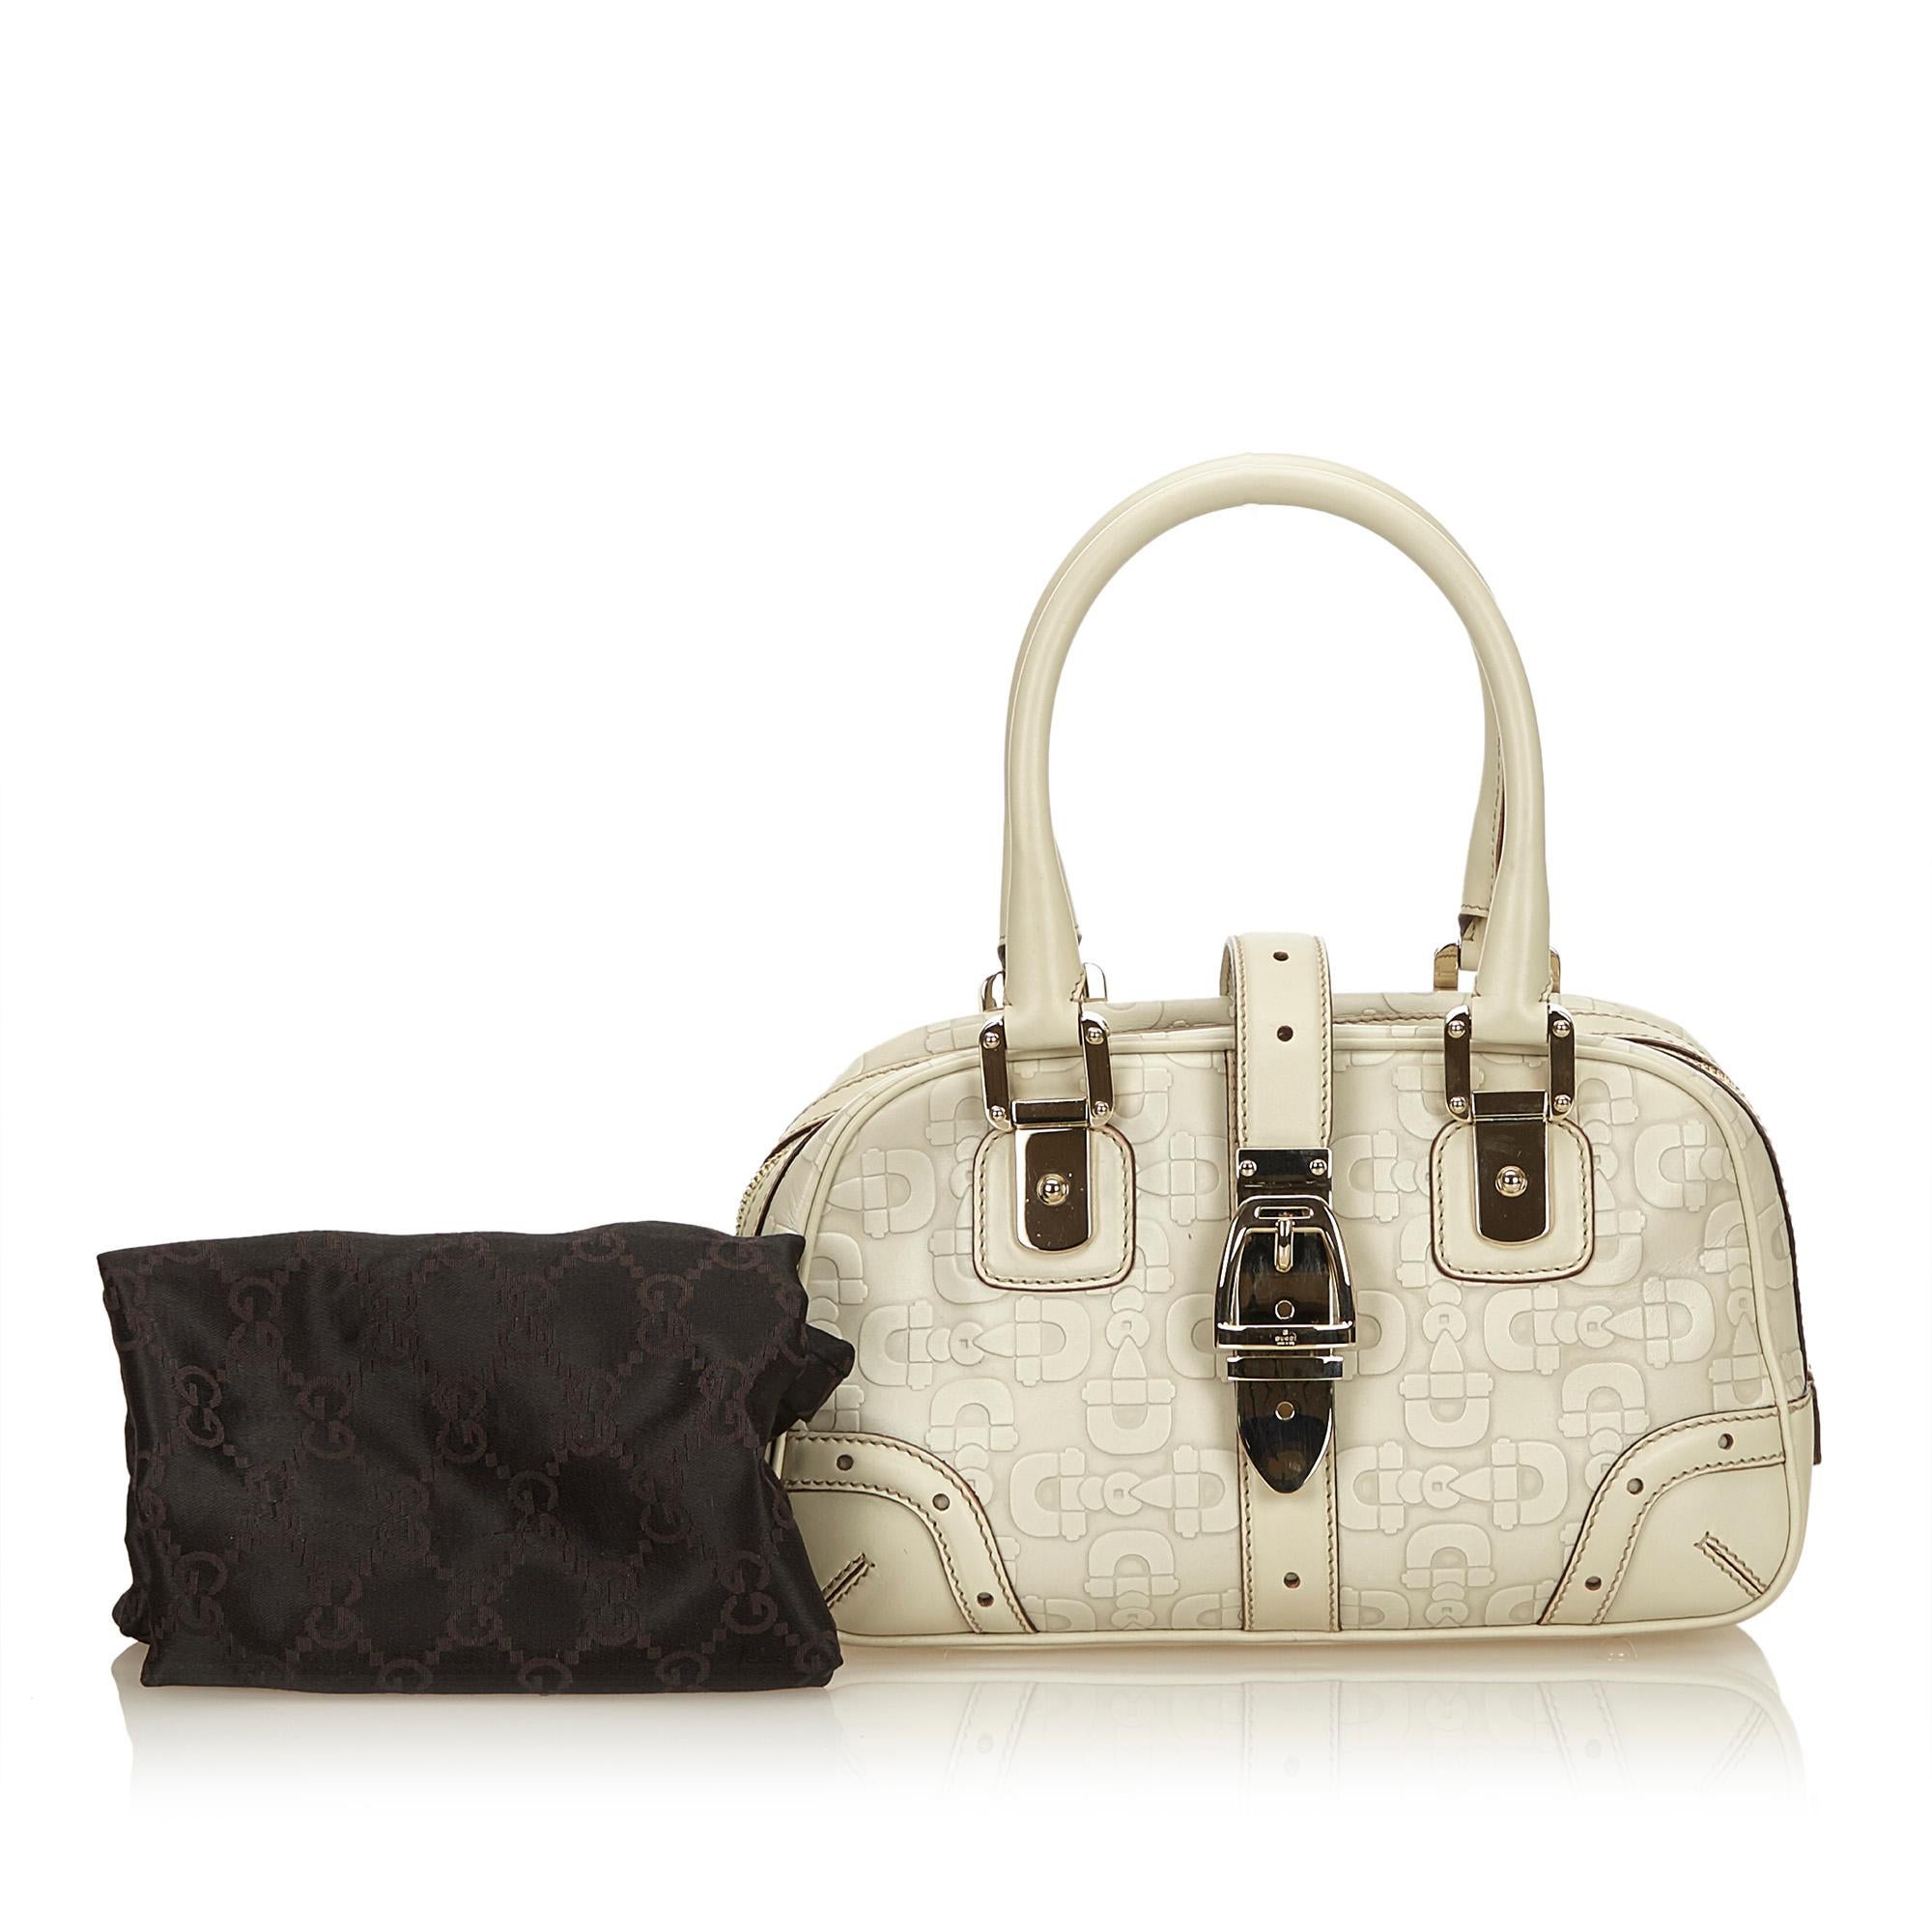 Gucci White Leather Horsebit Handbag For Sale 6